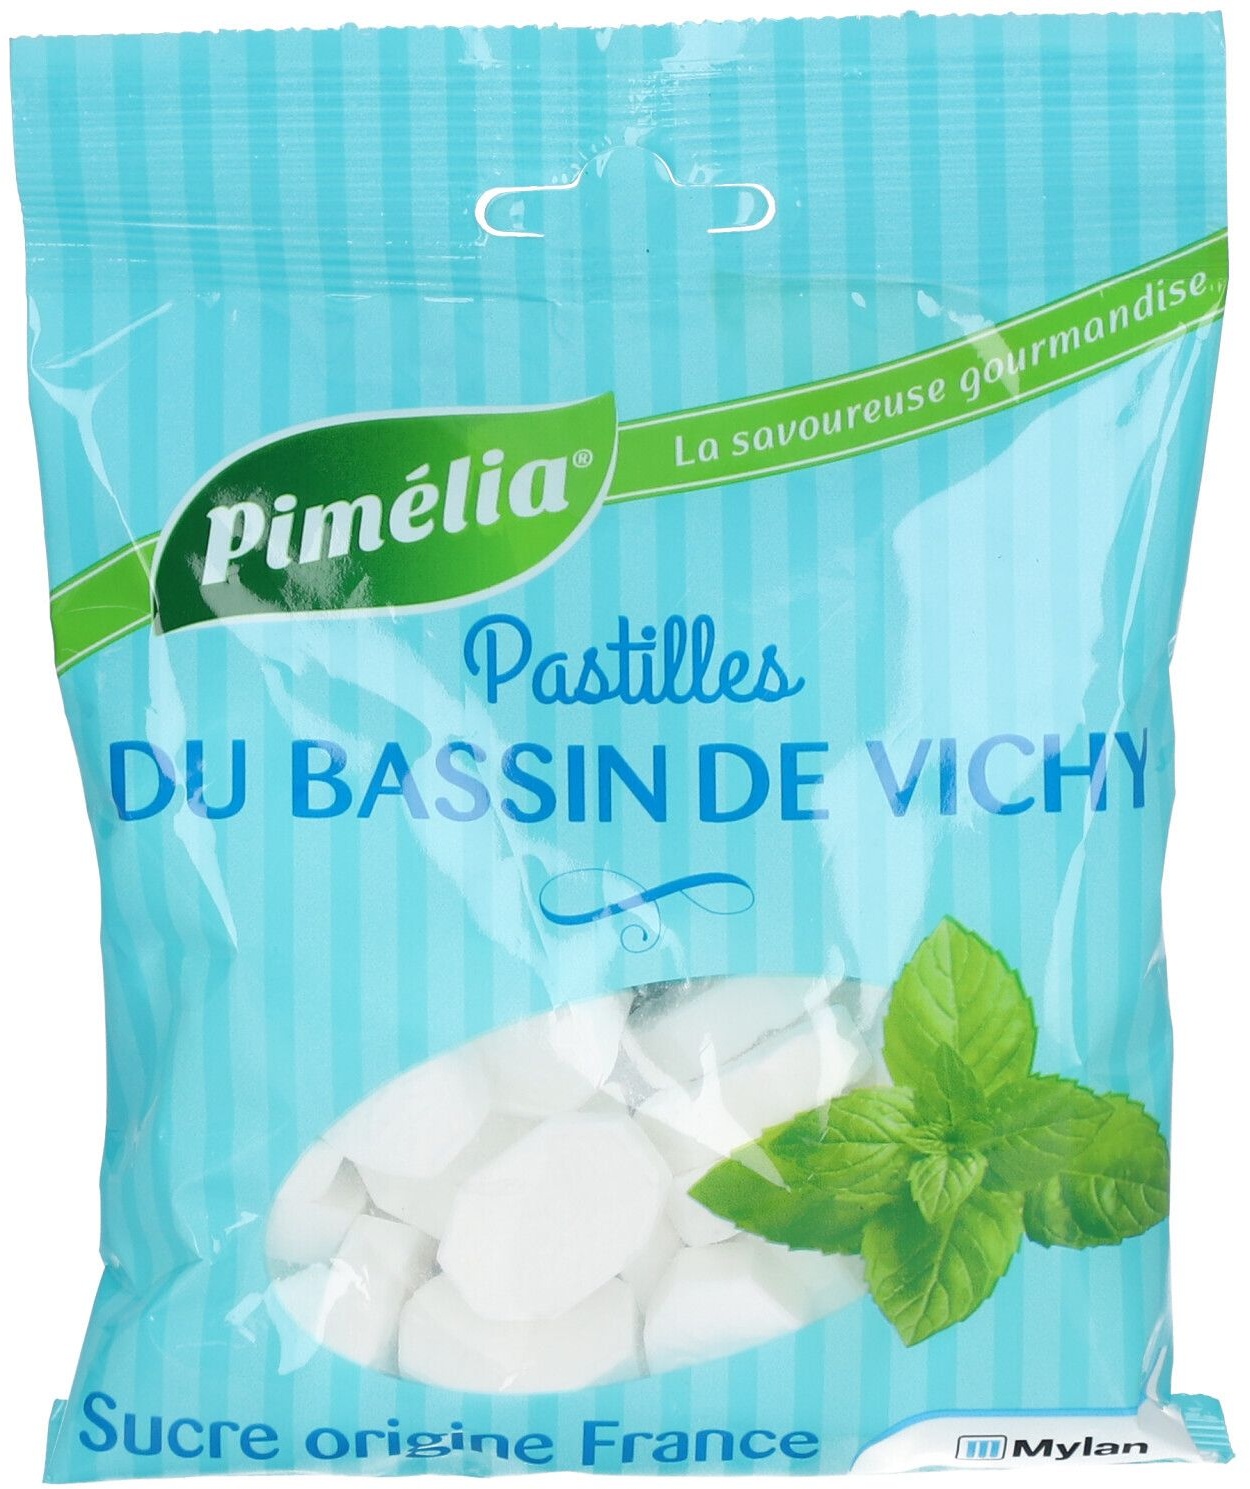 Pimélia Pastilles du Bassin de Vichy (Pastillen aus dem Vichy-Becken)